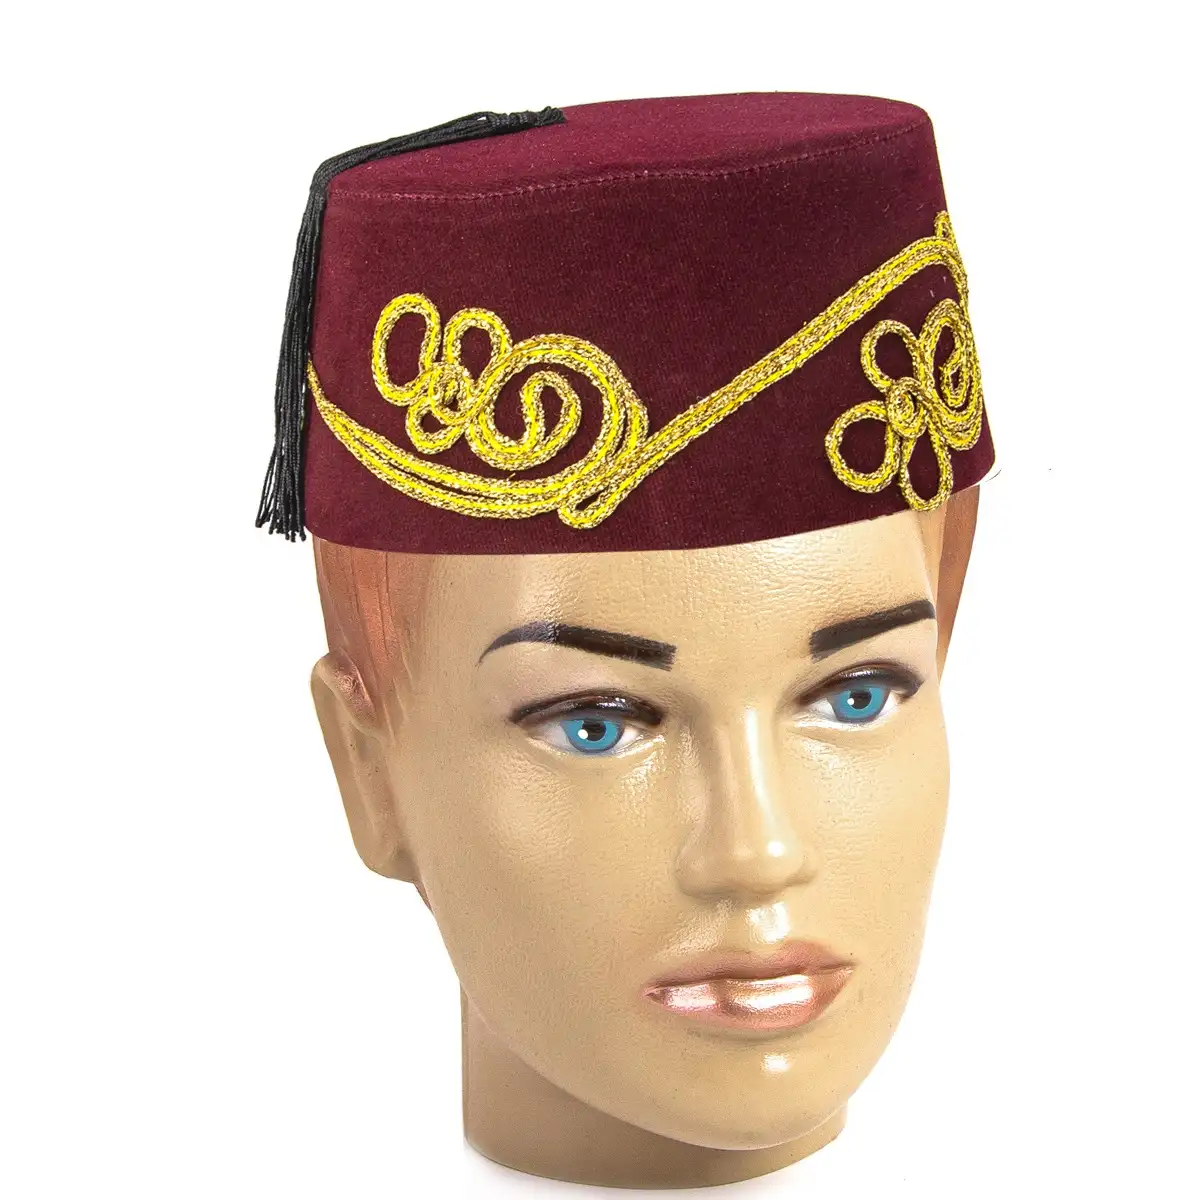 O chapéu tradicional bordado e bordado ottoman-turco fez chapéu cor vermelha da turquia